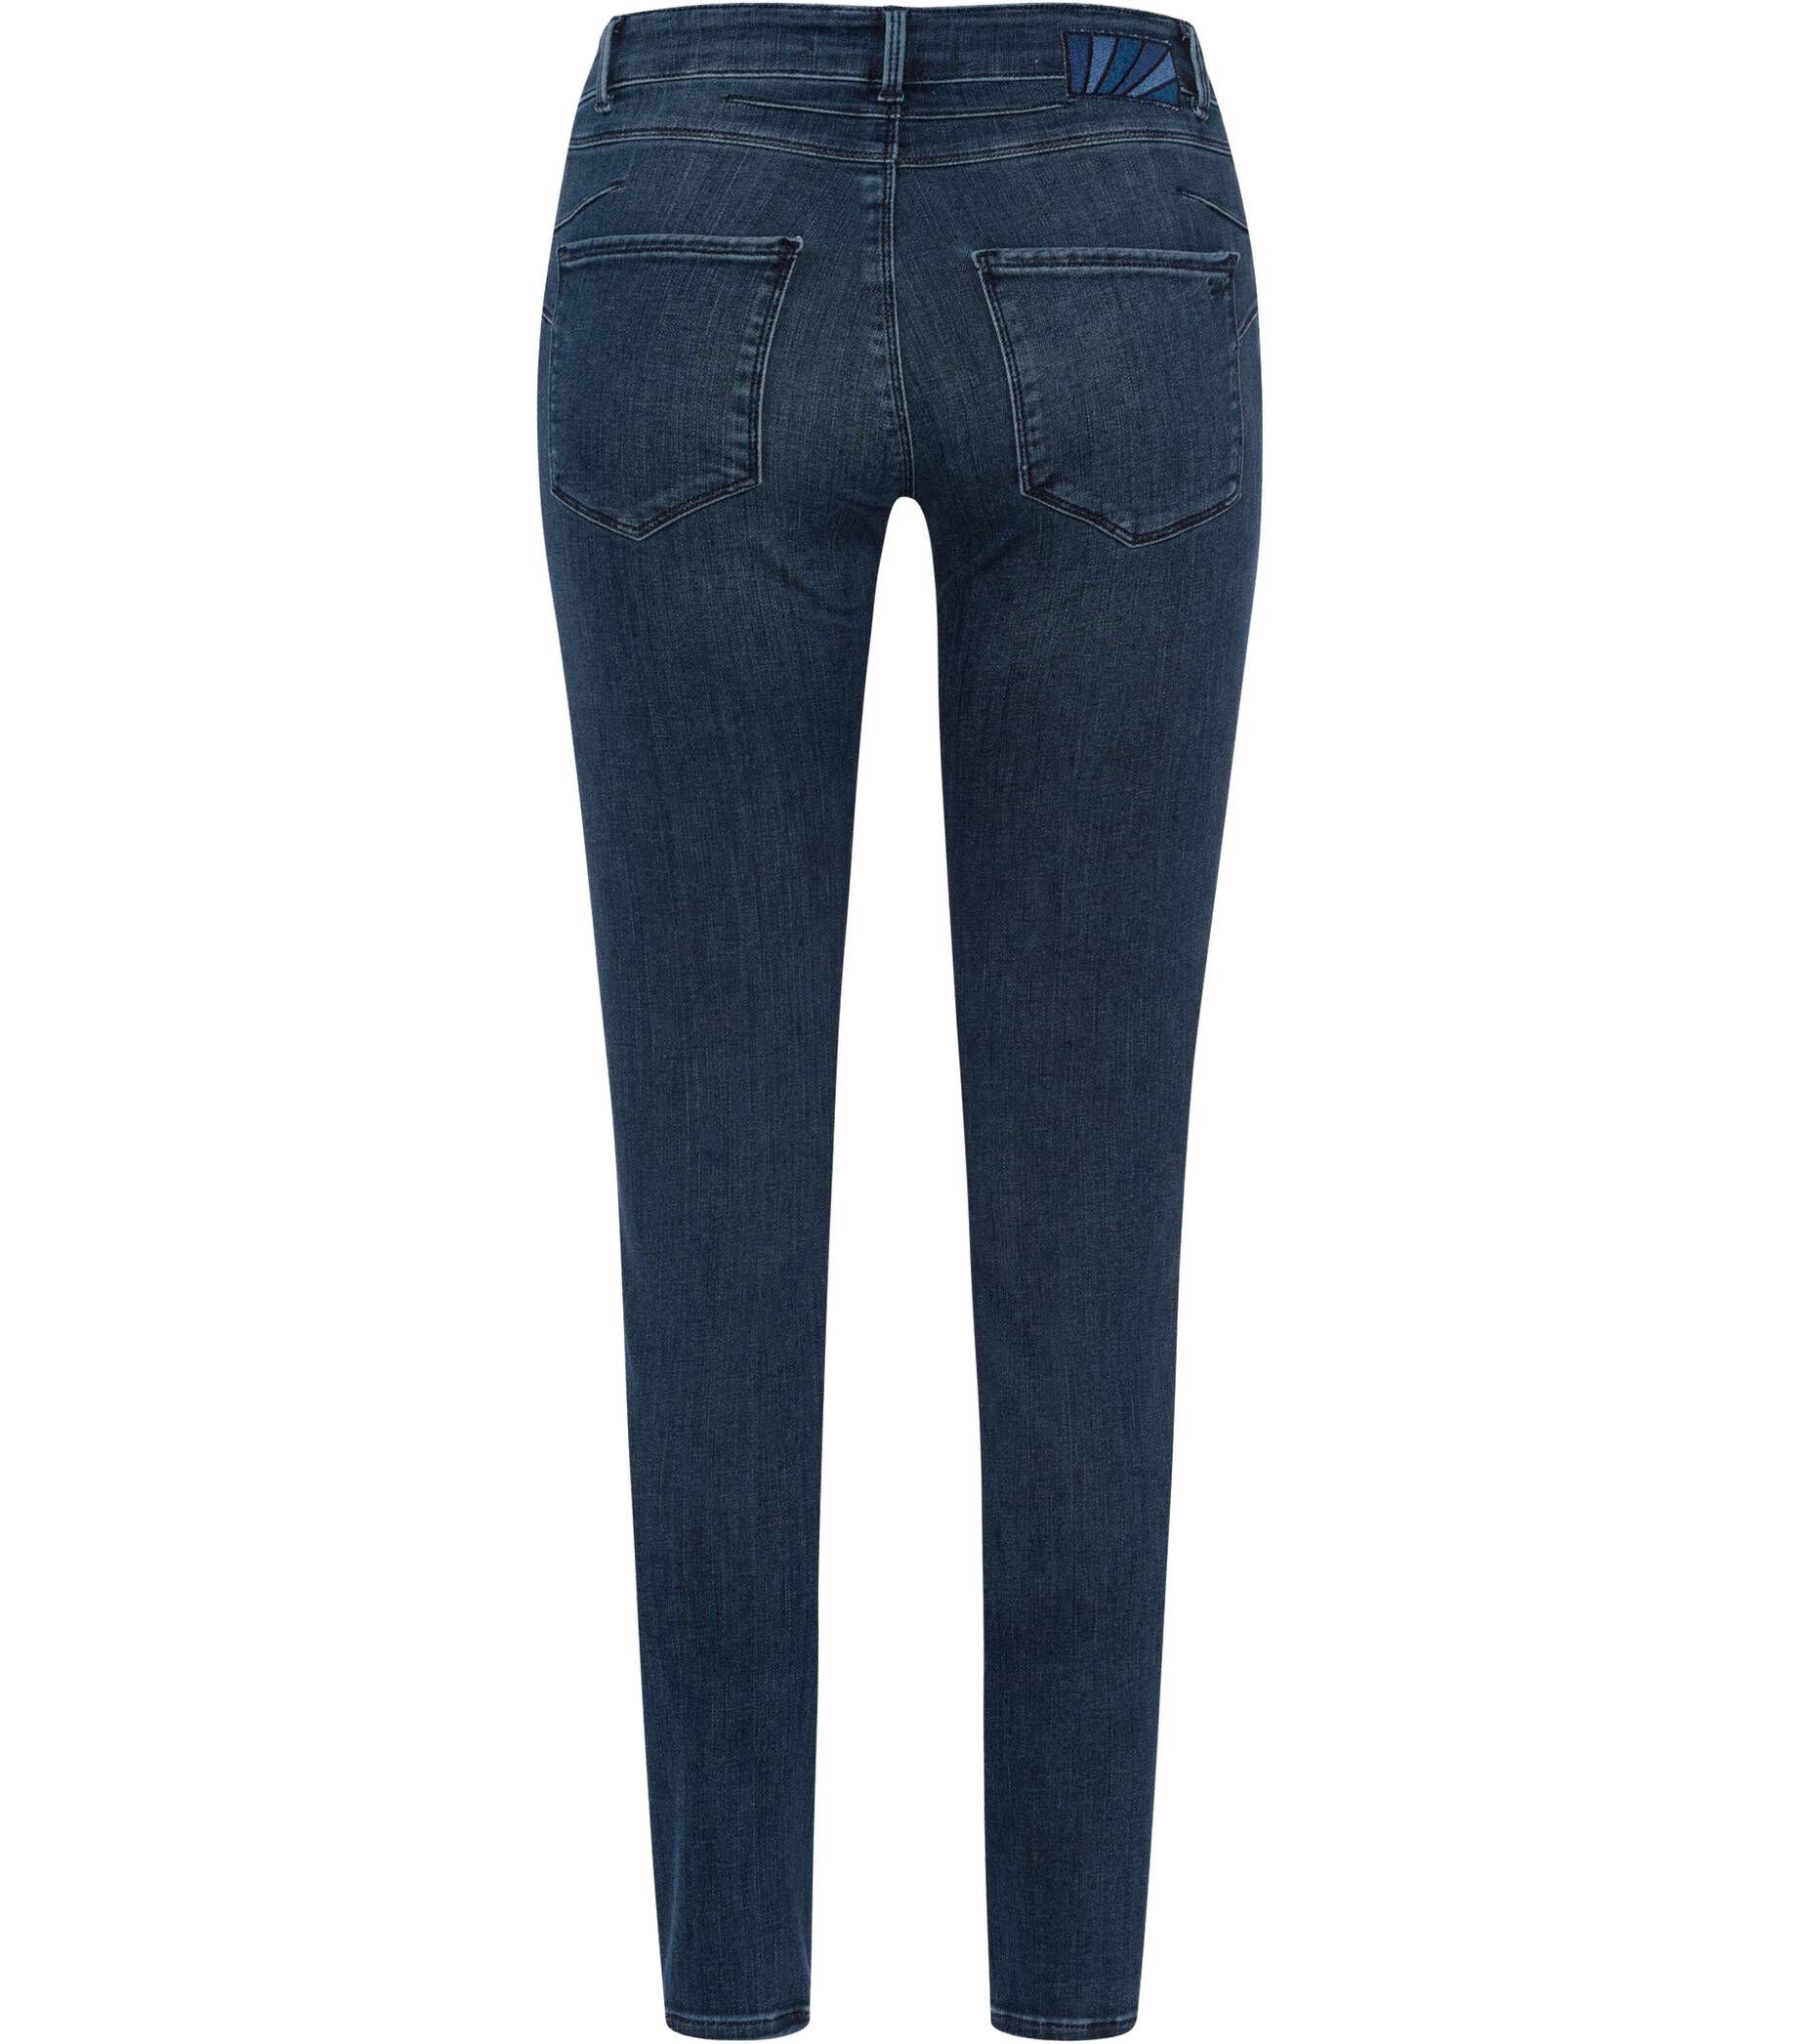 BRAX Damen Jeans STYLE.ANA Skinny Fit kaufen | engelhorn